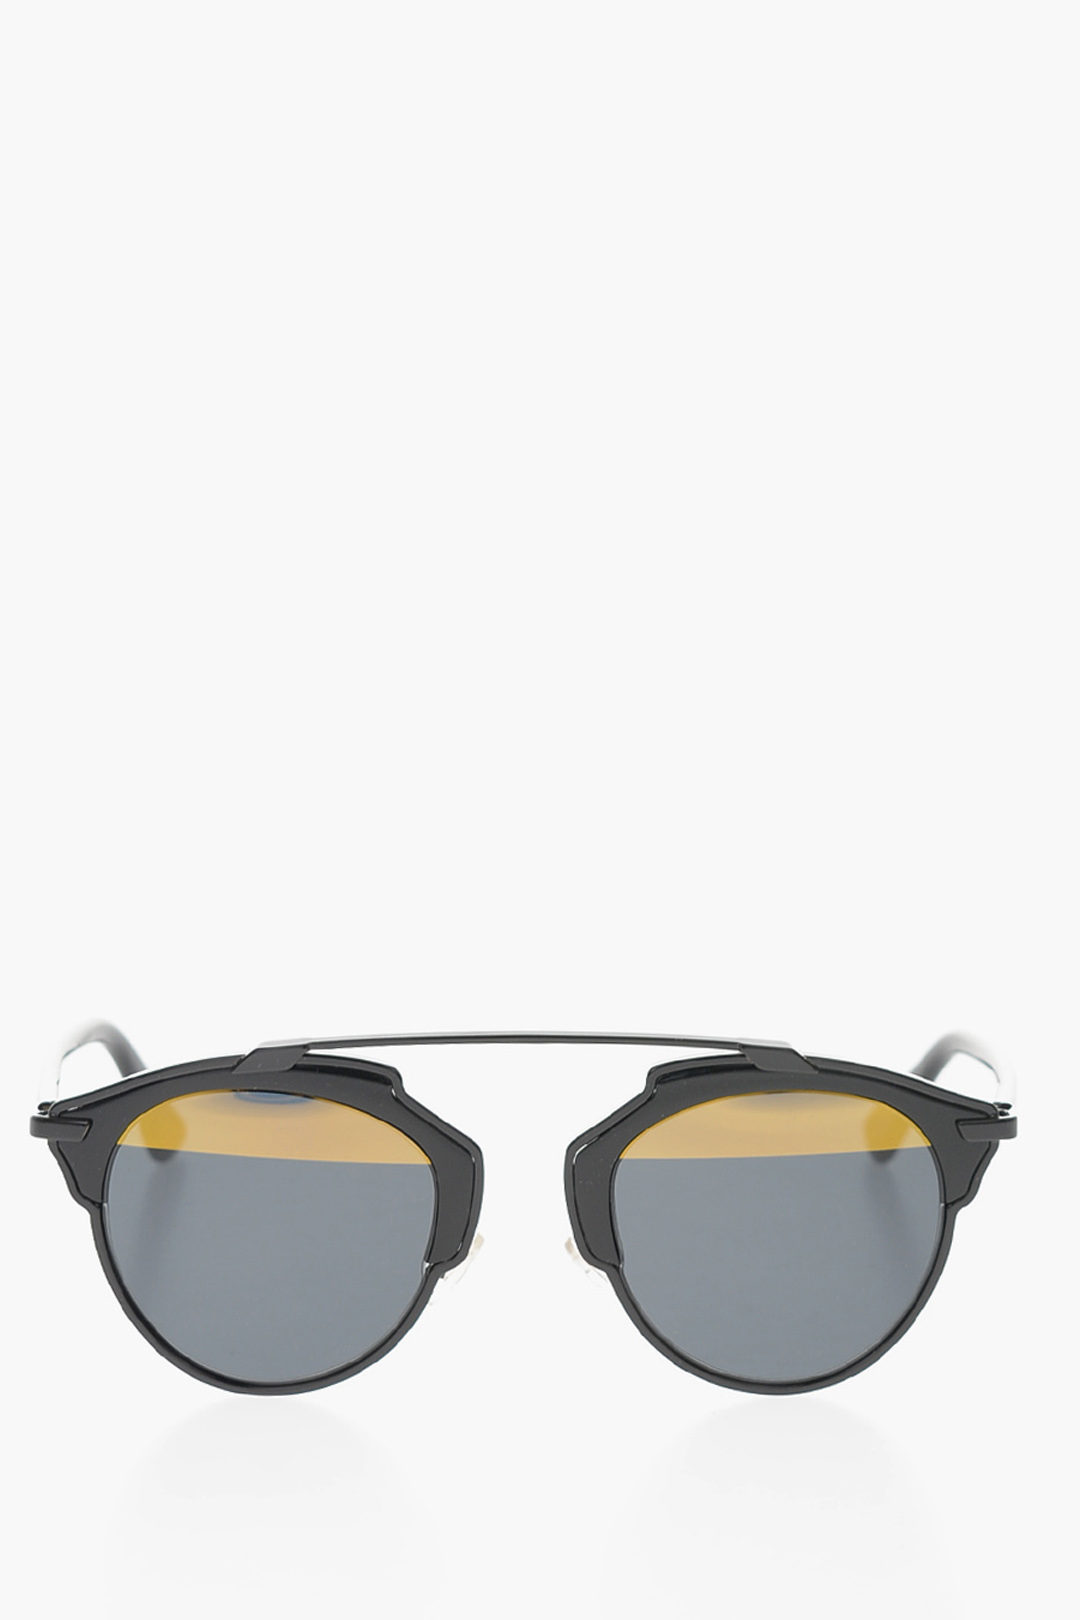 dior soreal sunglasses